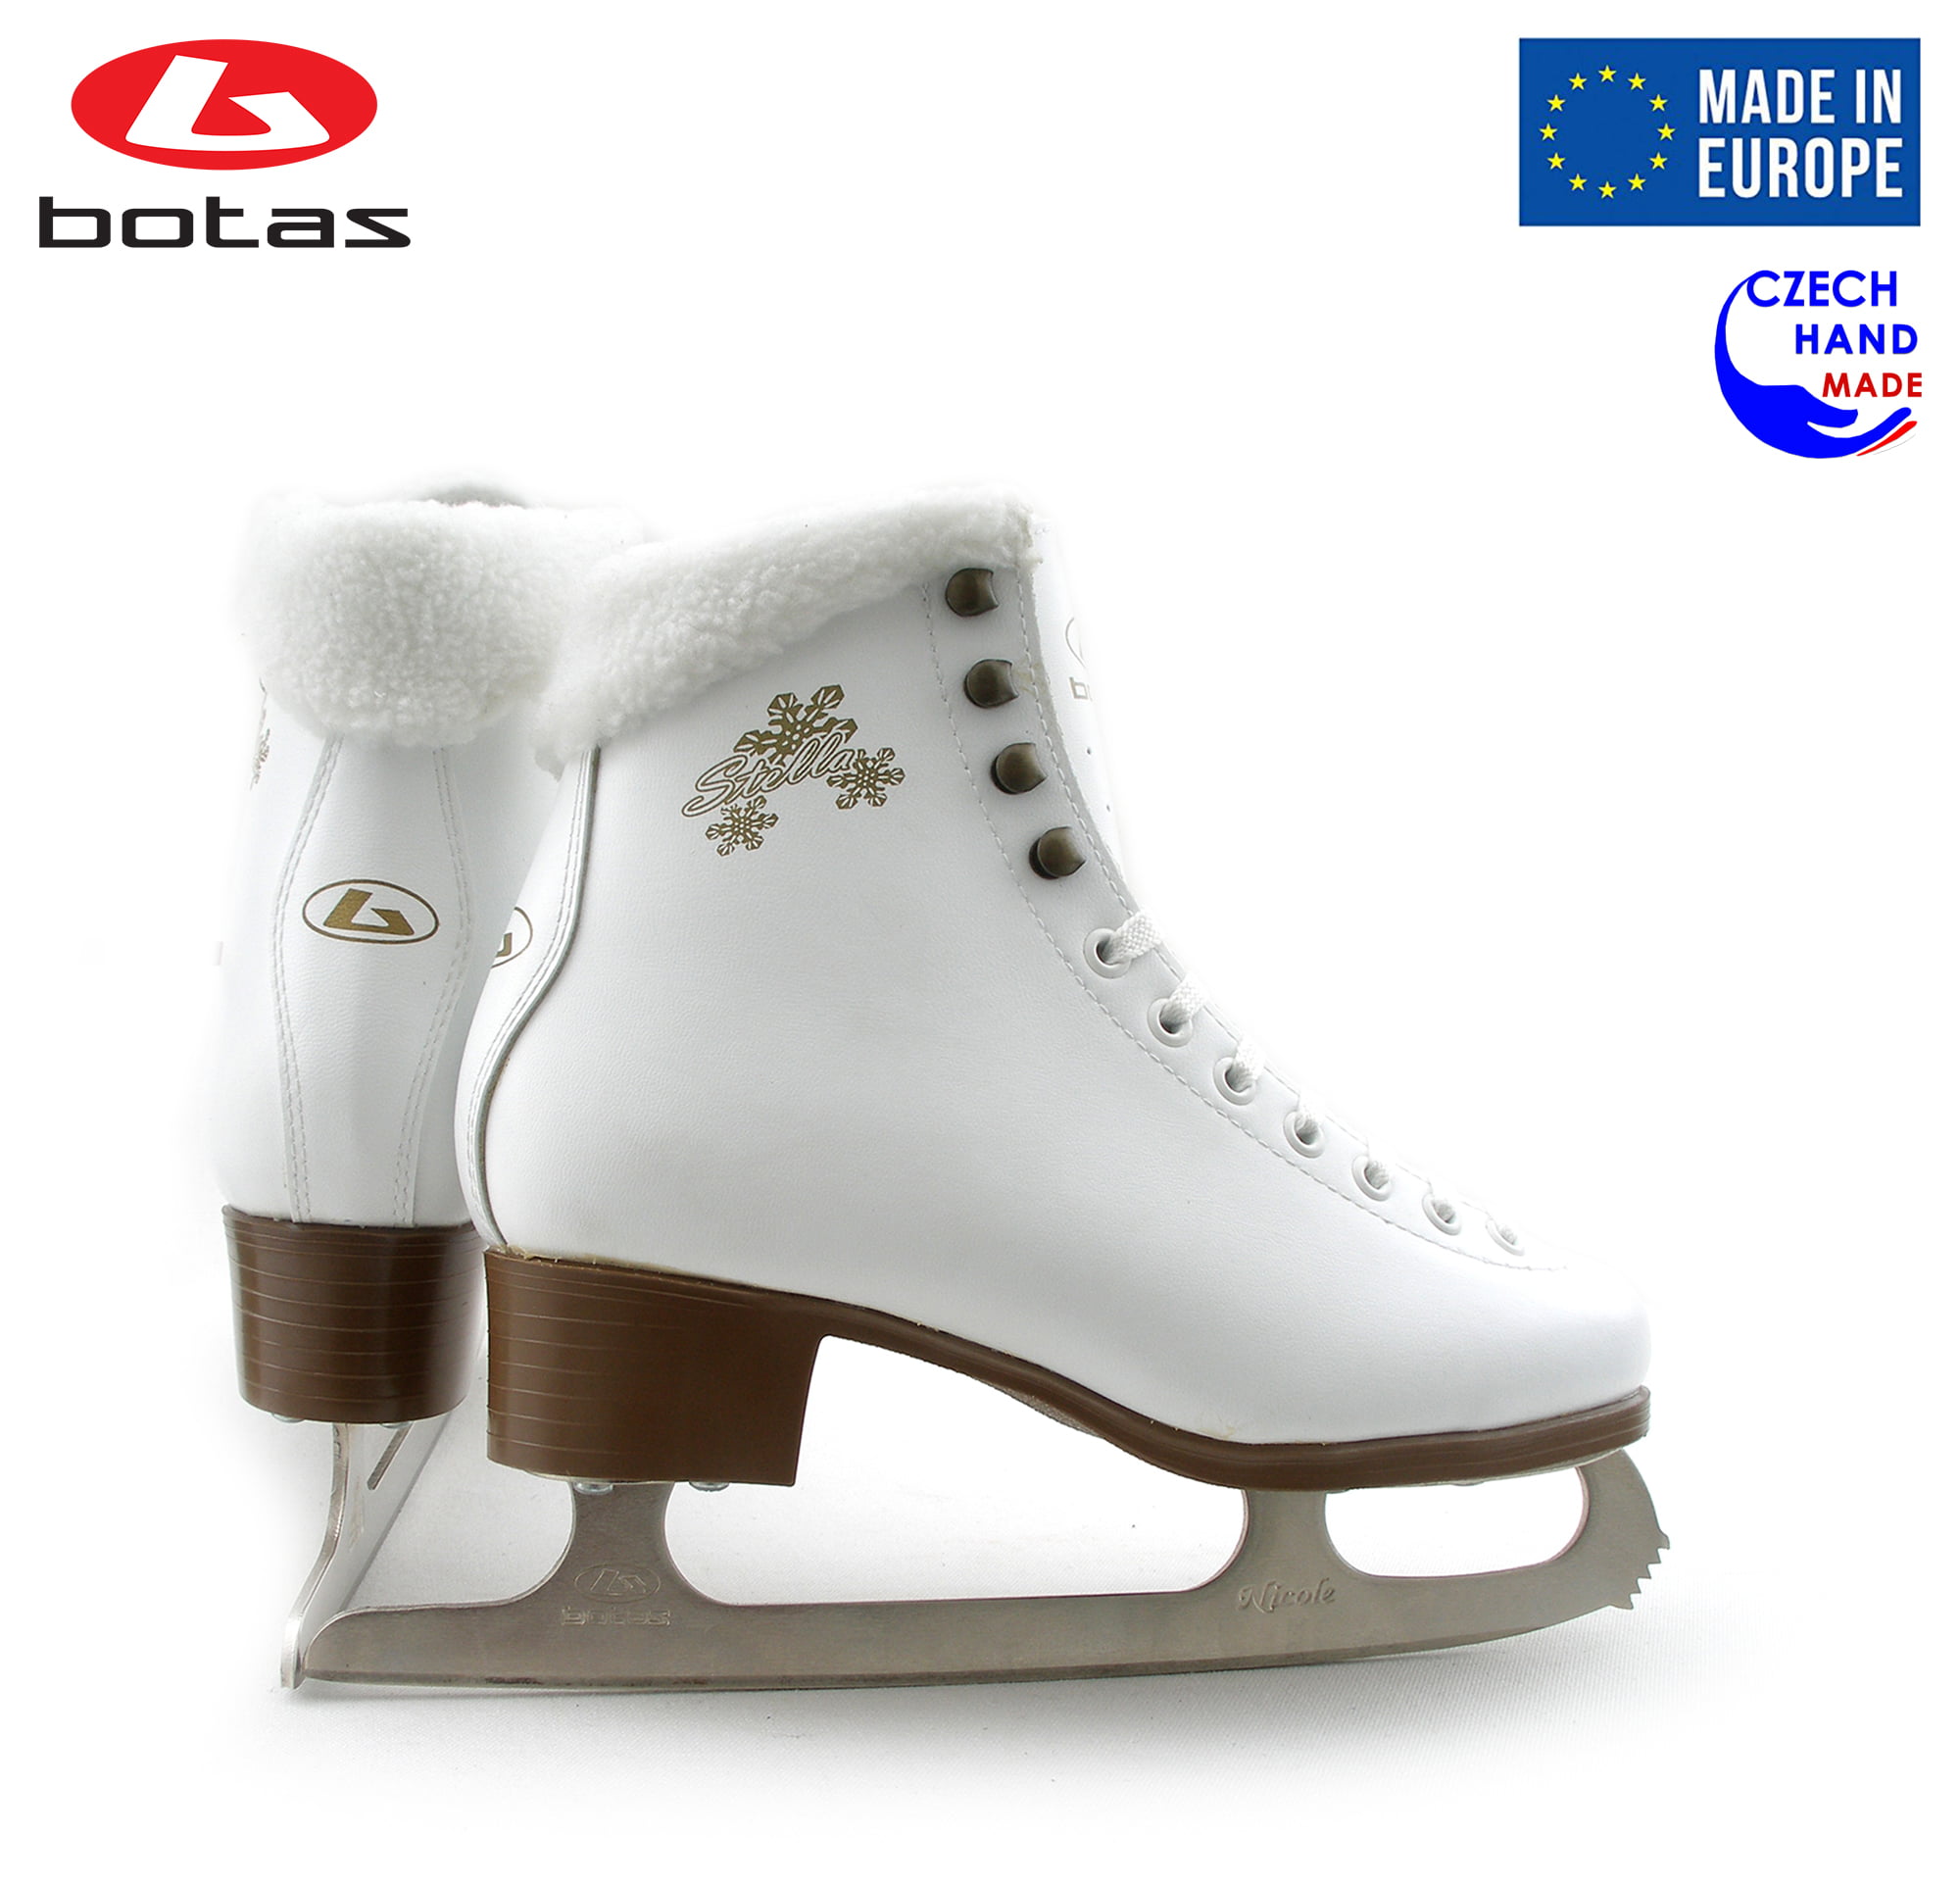 Stella Czech Republic Botas Womens White Ice Skates Made in Europe 